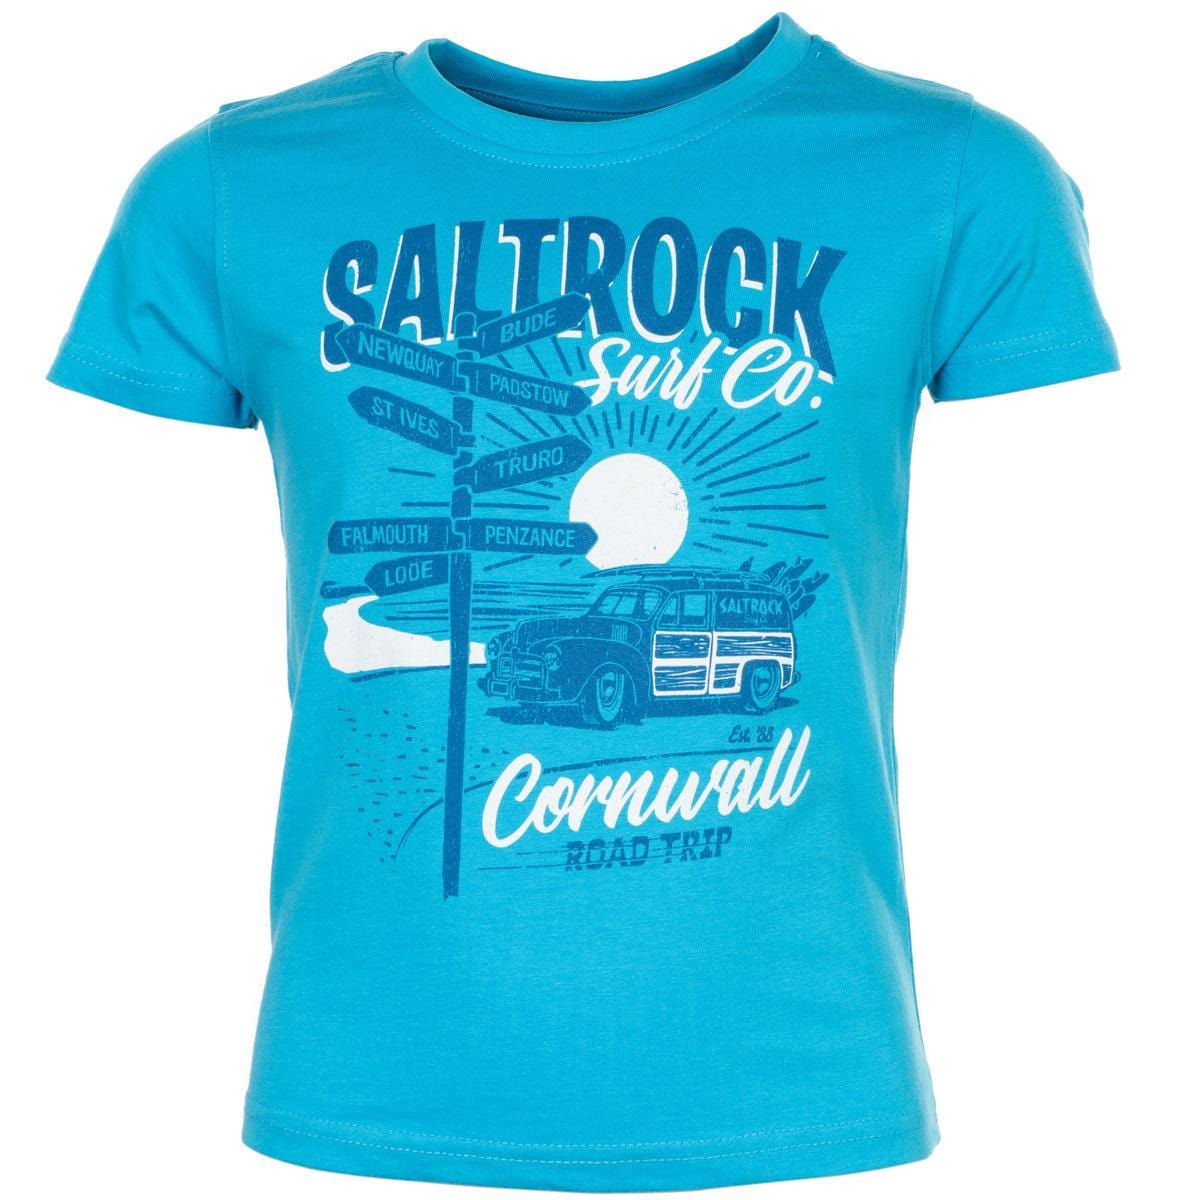 Cornwall Signpost - Short Sleeve T-Shirt - Blue